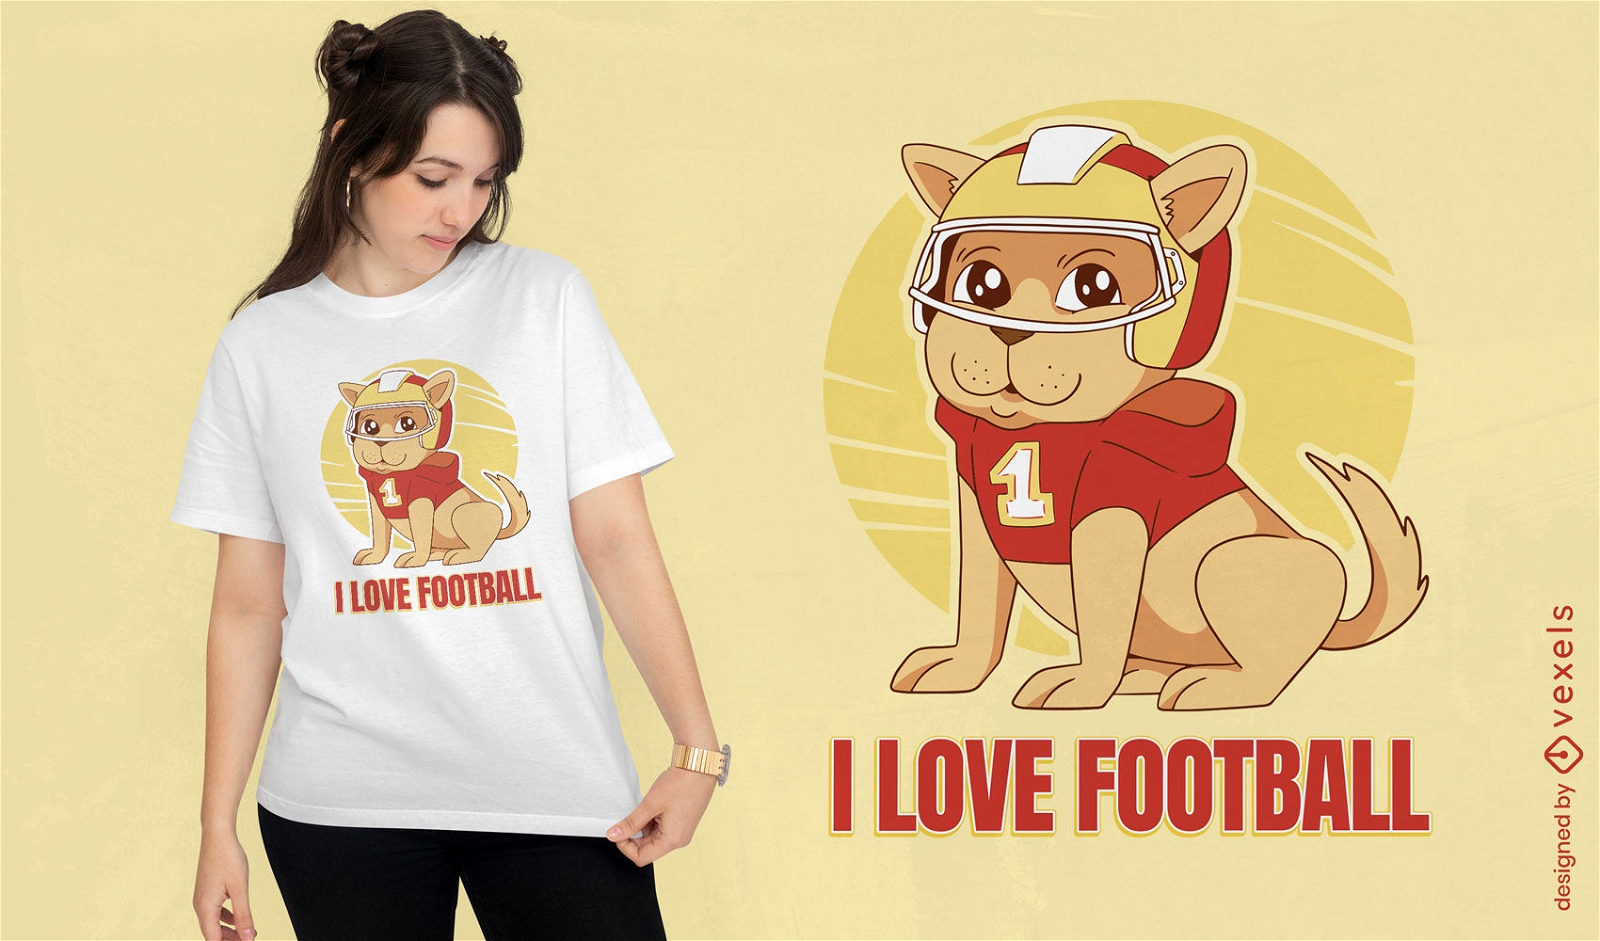 I love football dog t-shirt design